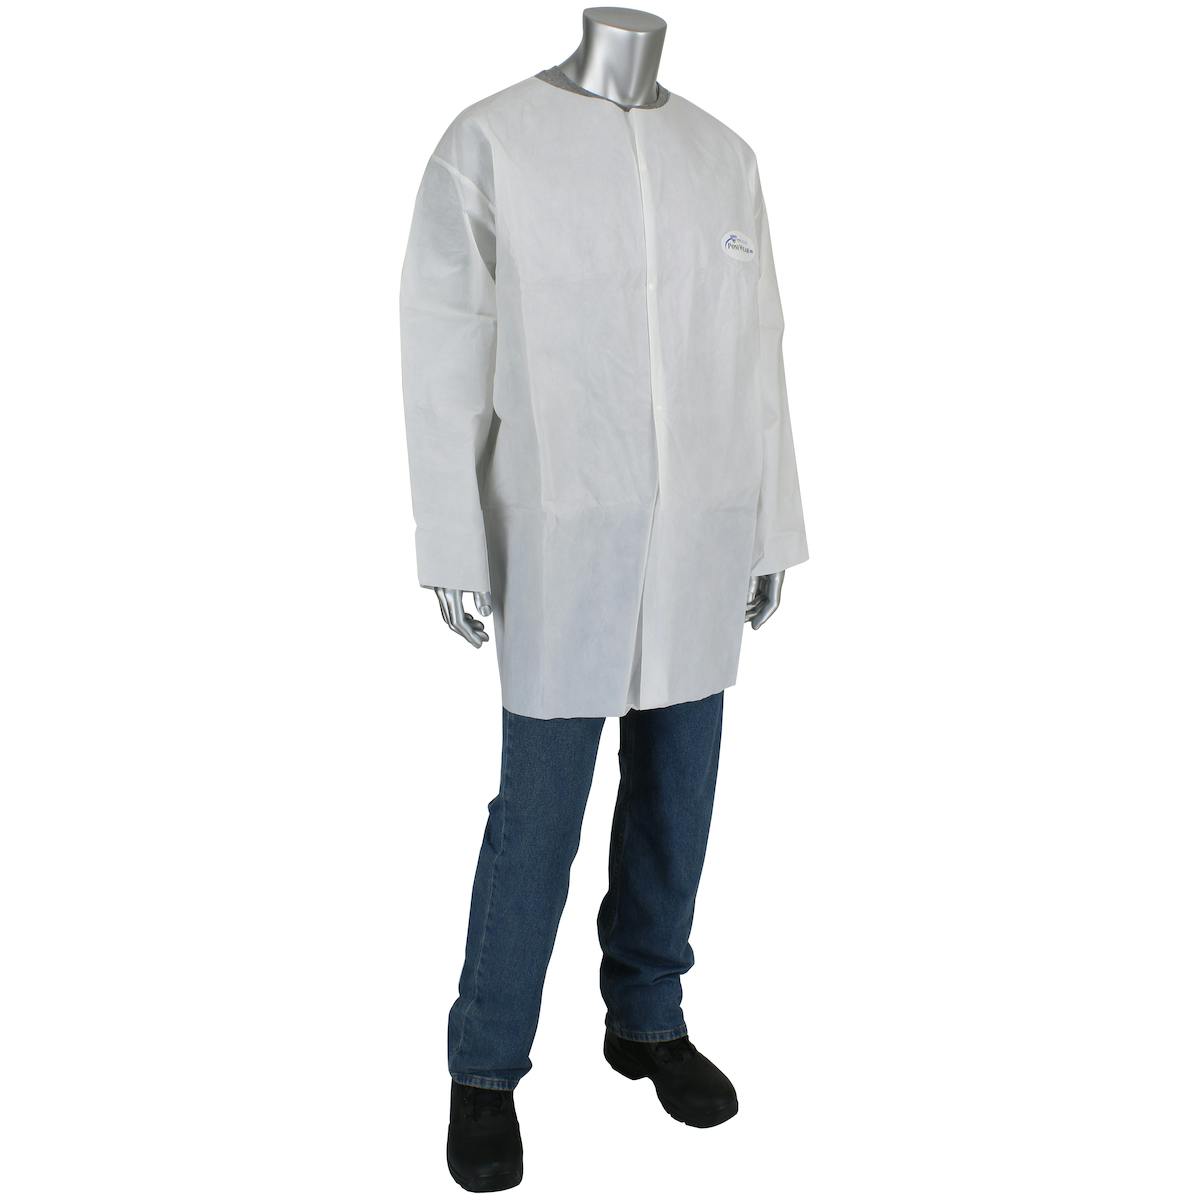 PosiWear UB - Lab Coat with No Pockets 56 gsm, White (3718)